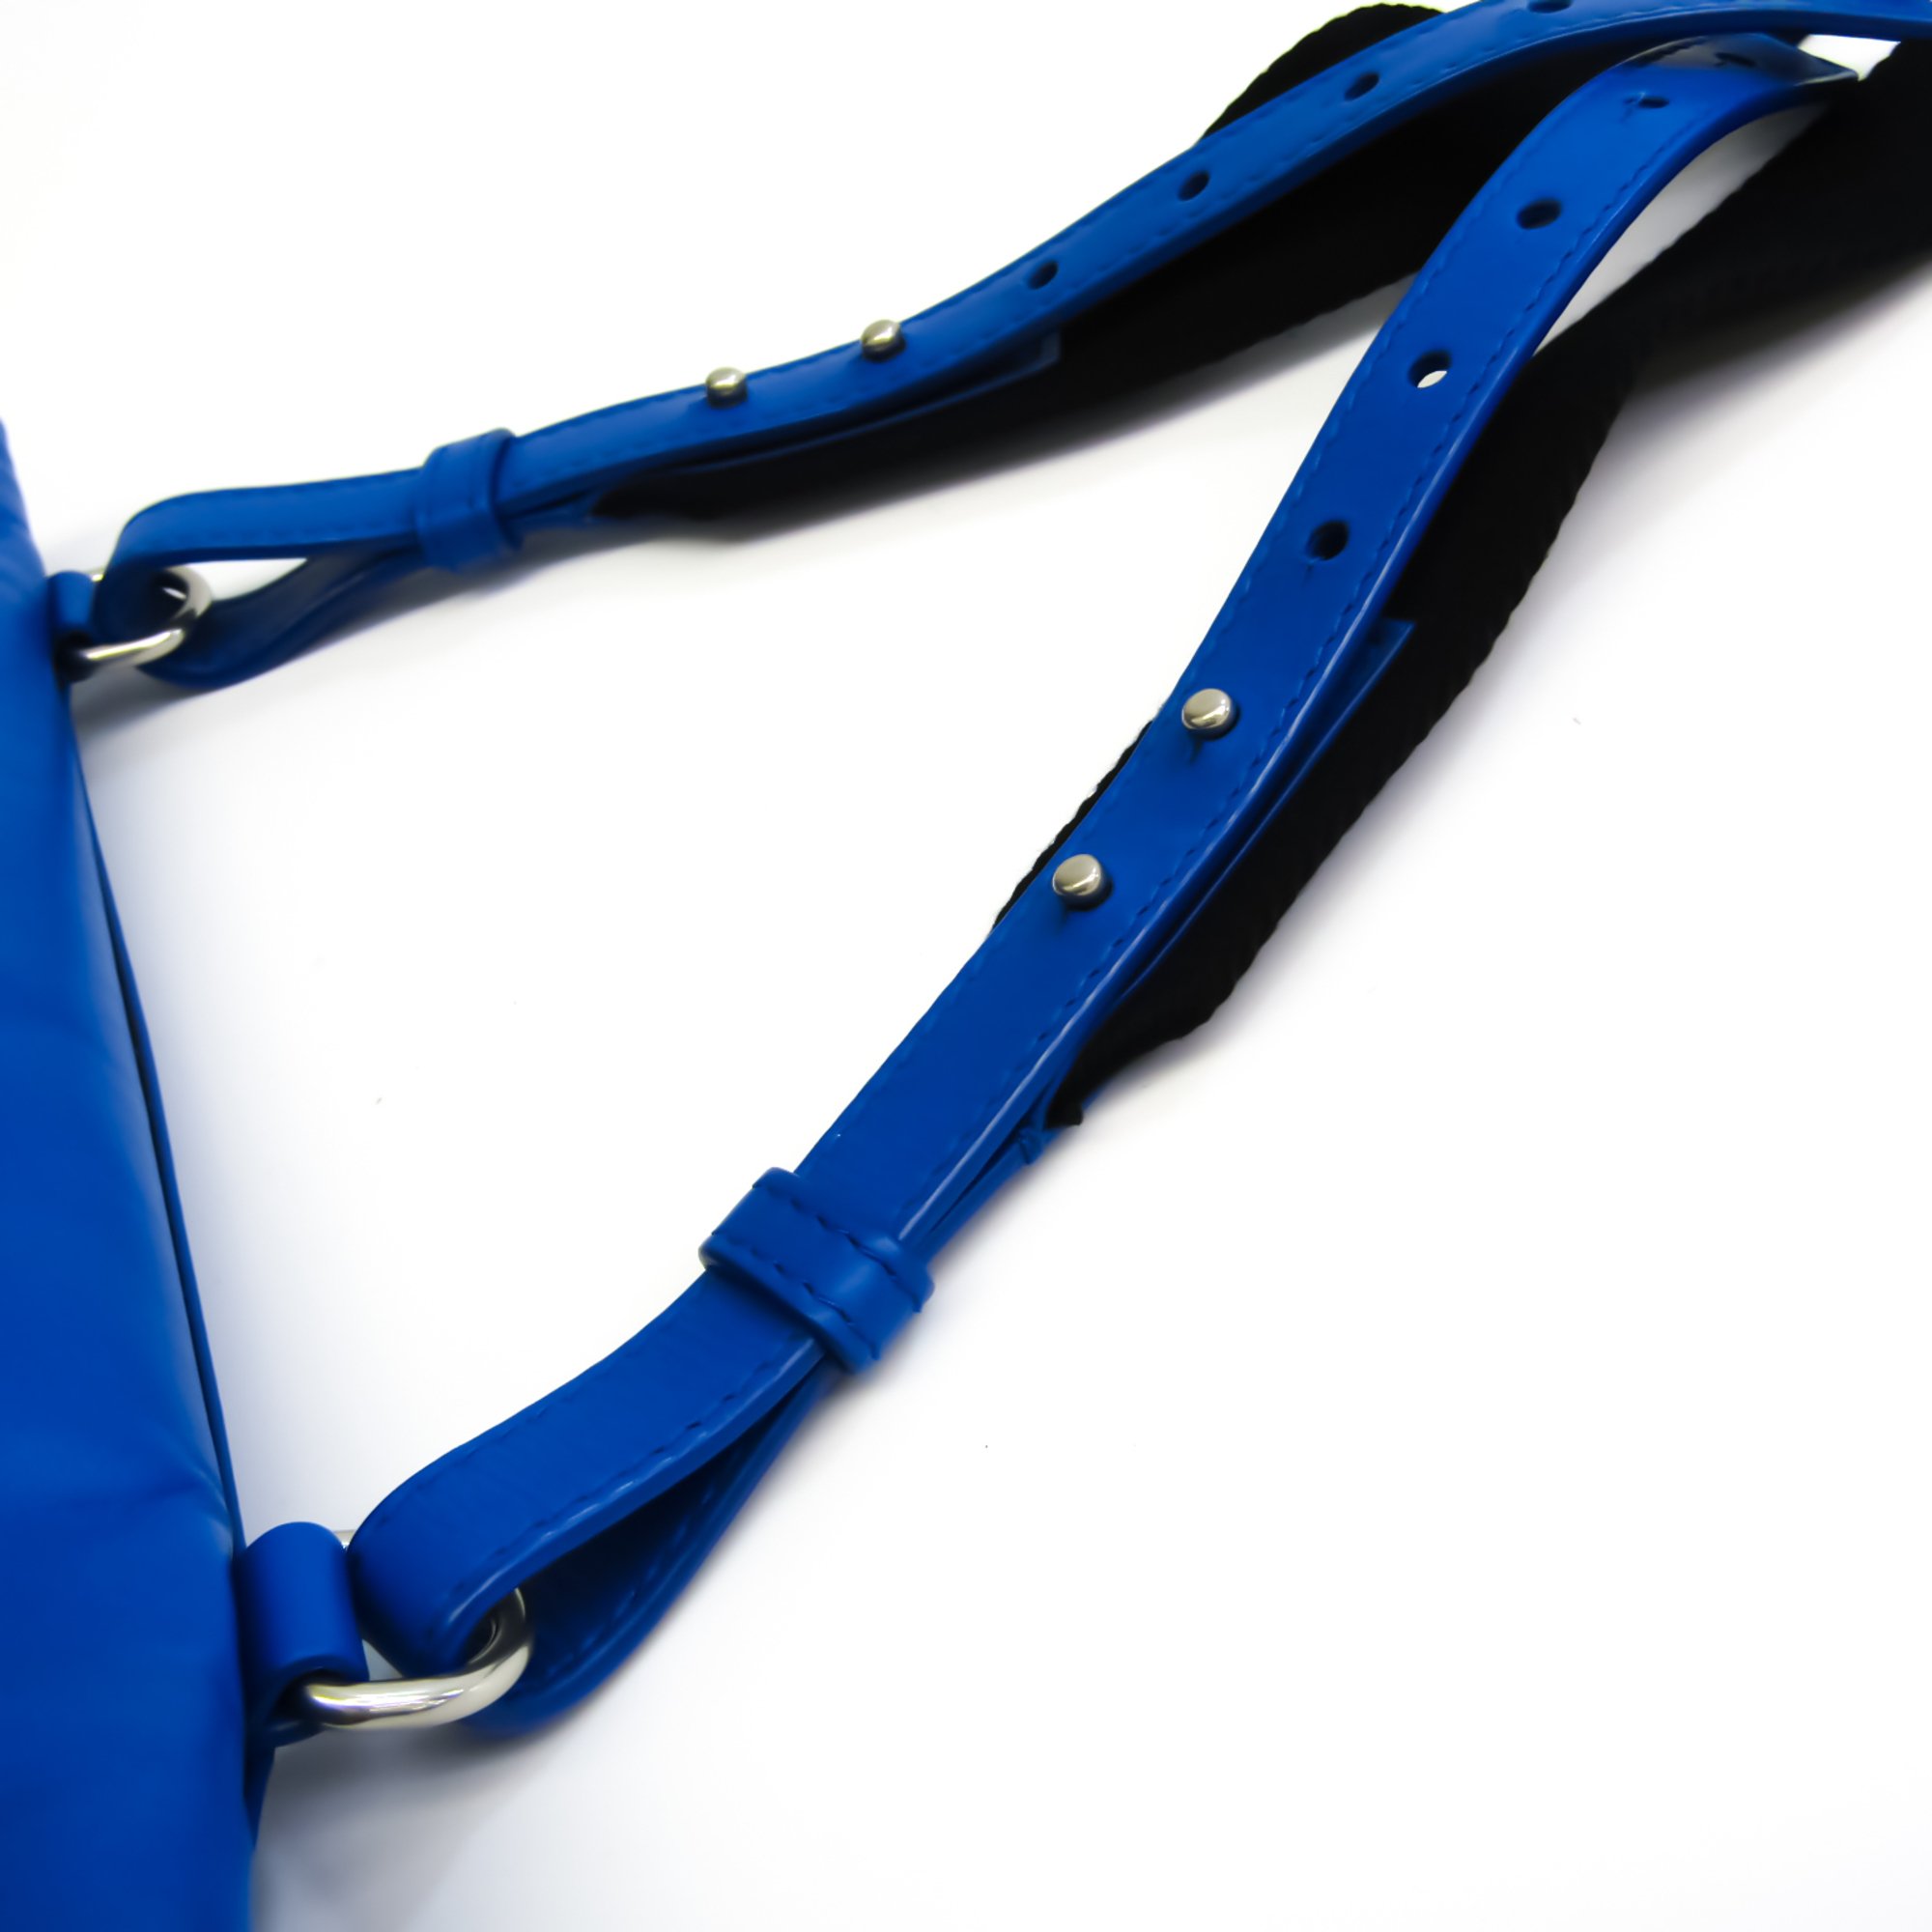 Bottega Veneta Unisex Leather Shoulder Bag Blue